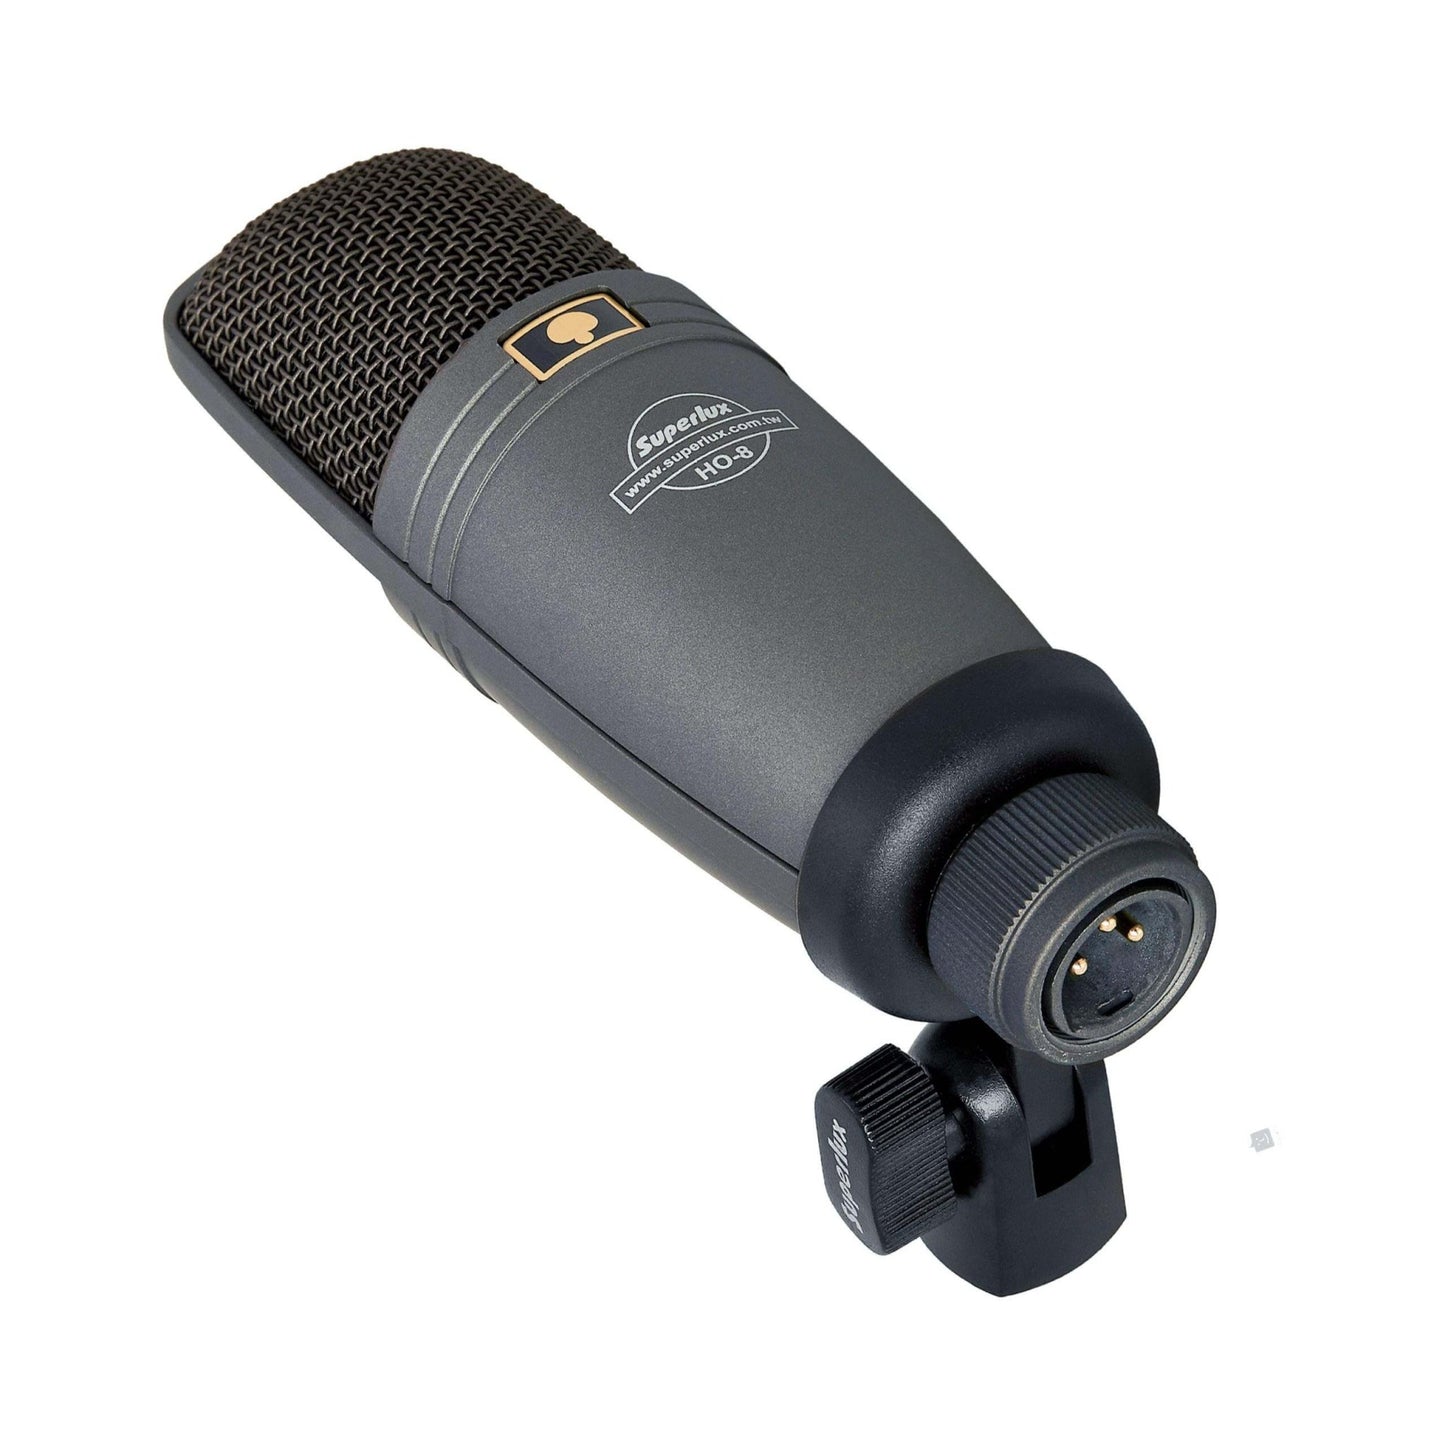 Superlux Overhead / Vocal Condenser Microphone H08 - GADGET WAGON MICROPHONE